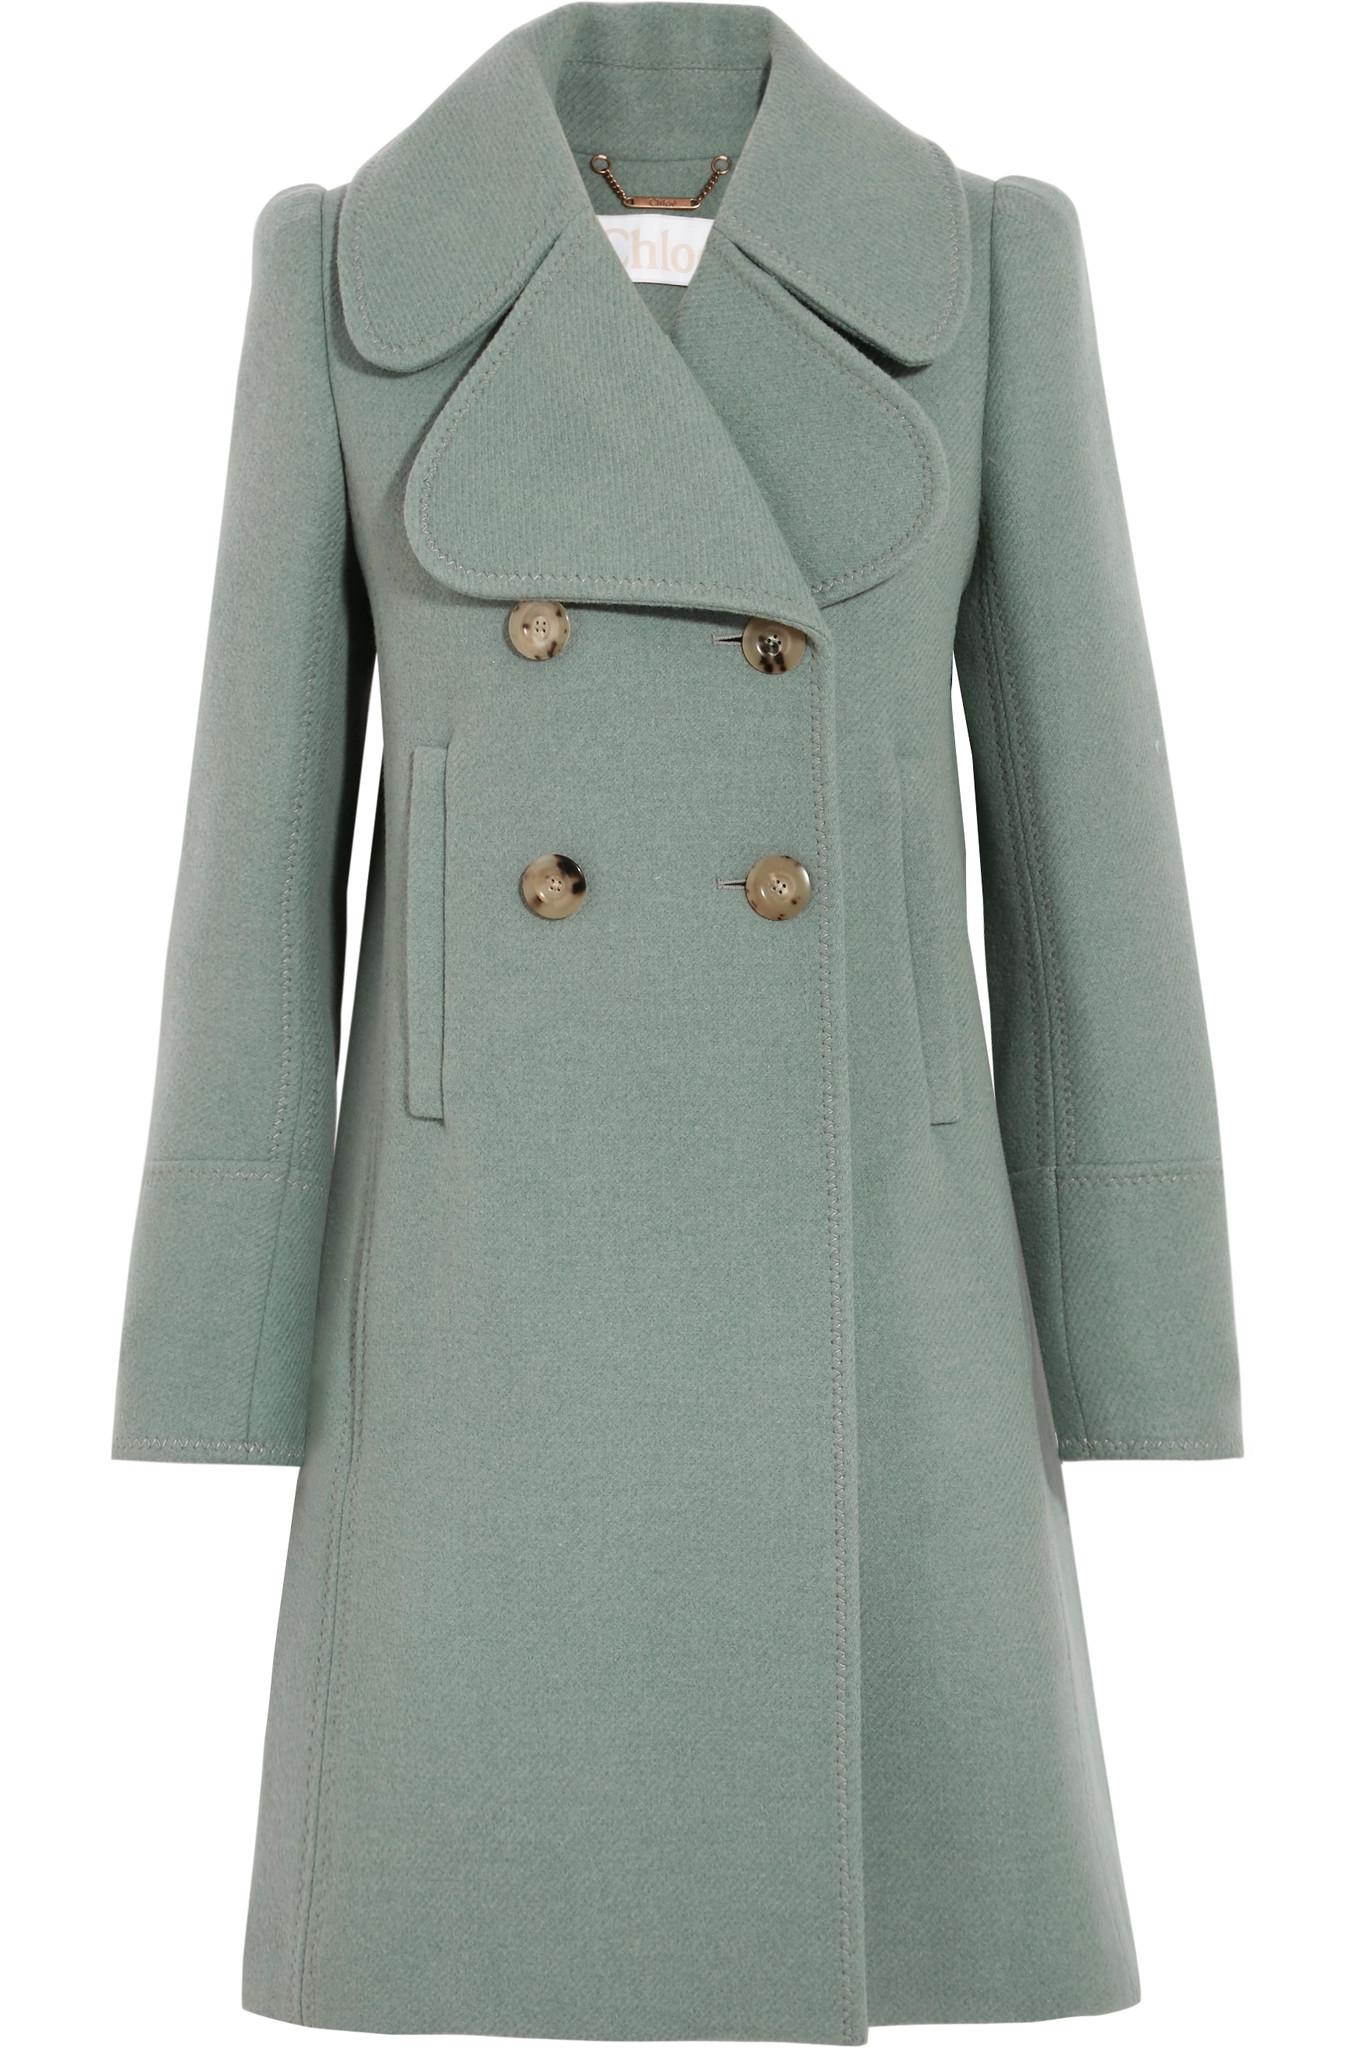 Chloé Double-breasted Wool-blend Felt Coat in Green - Lyst